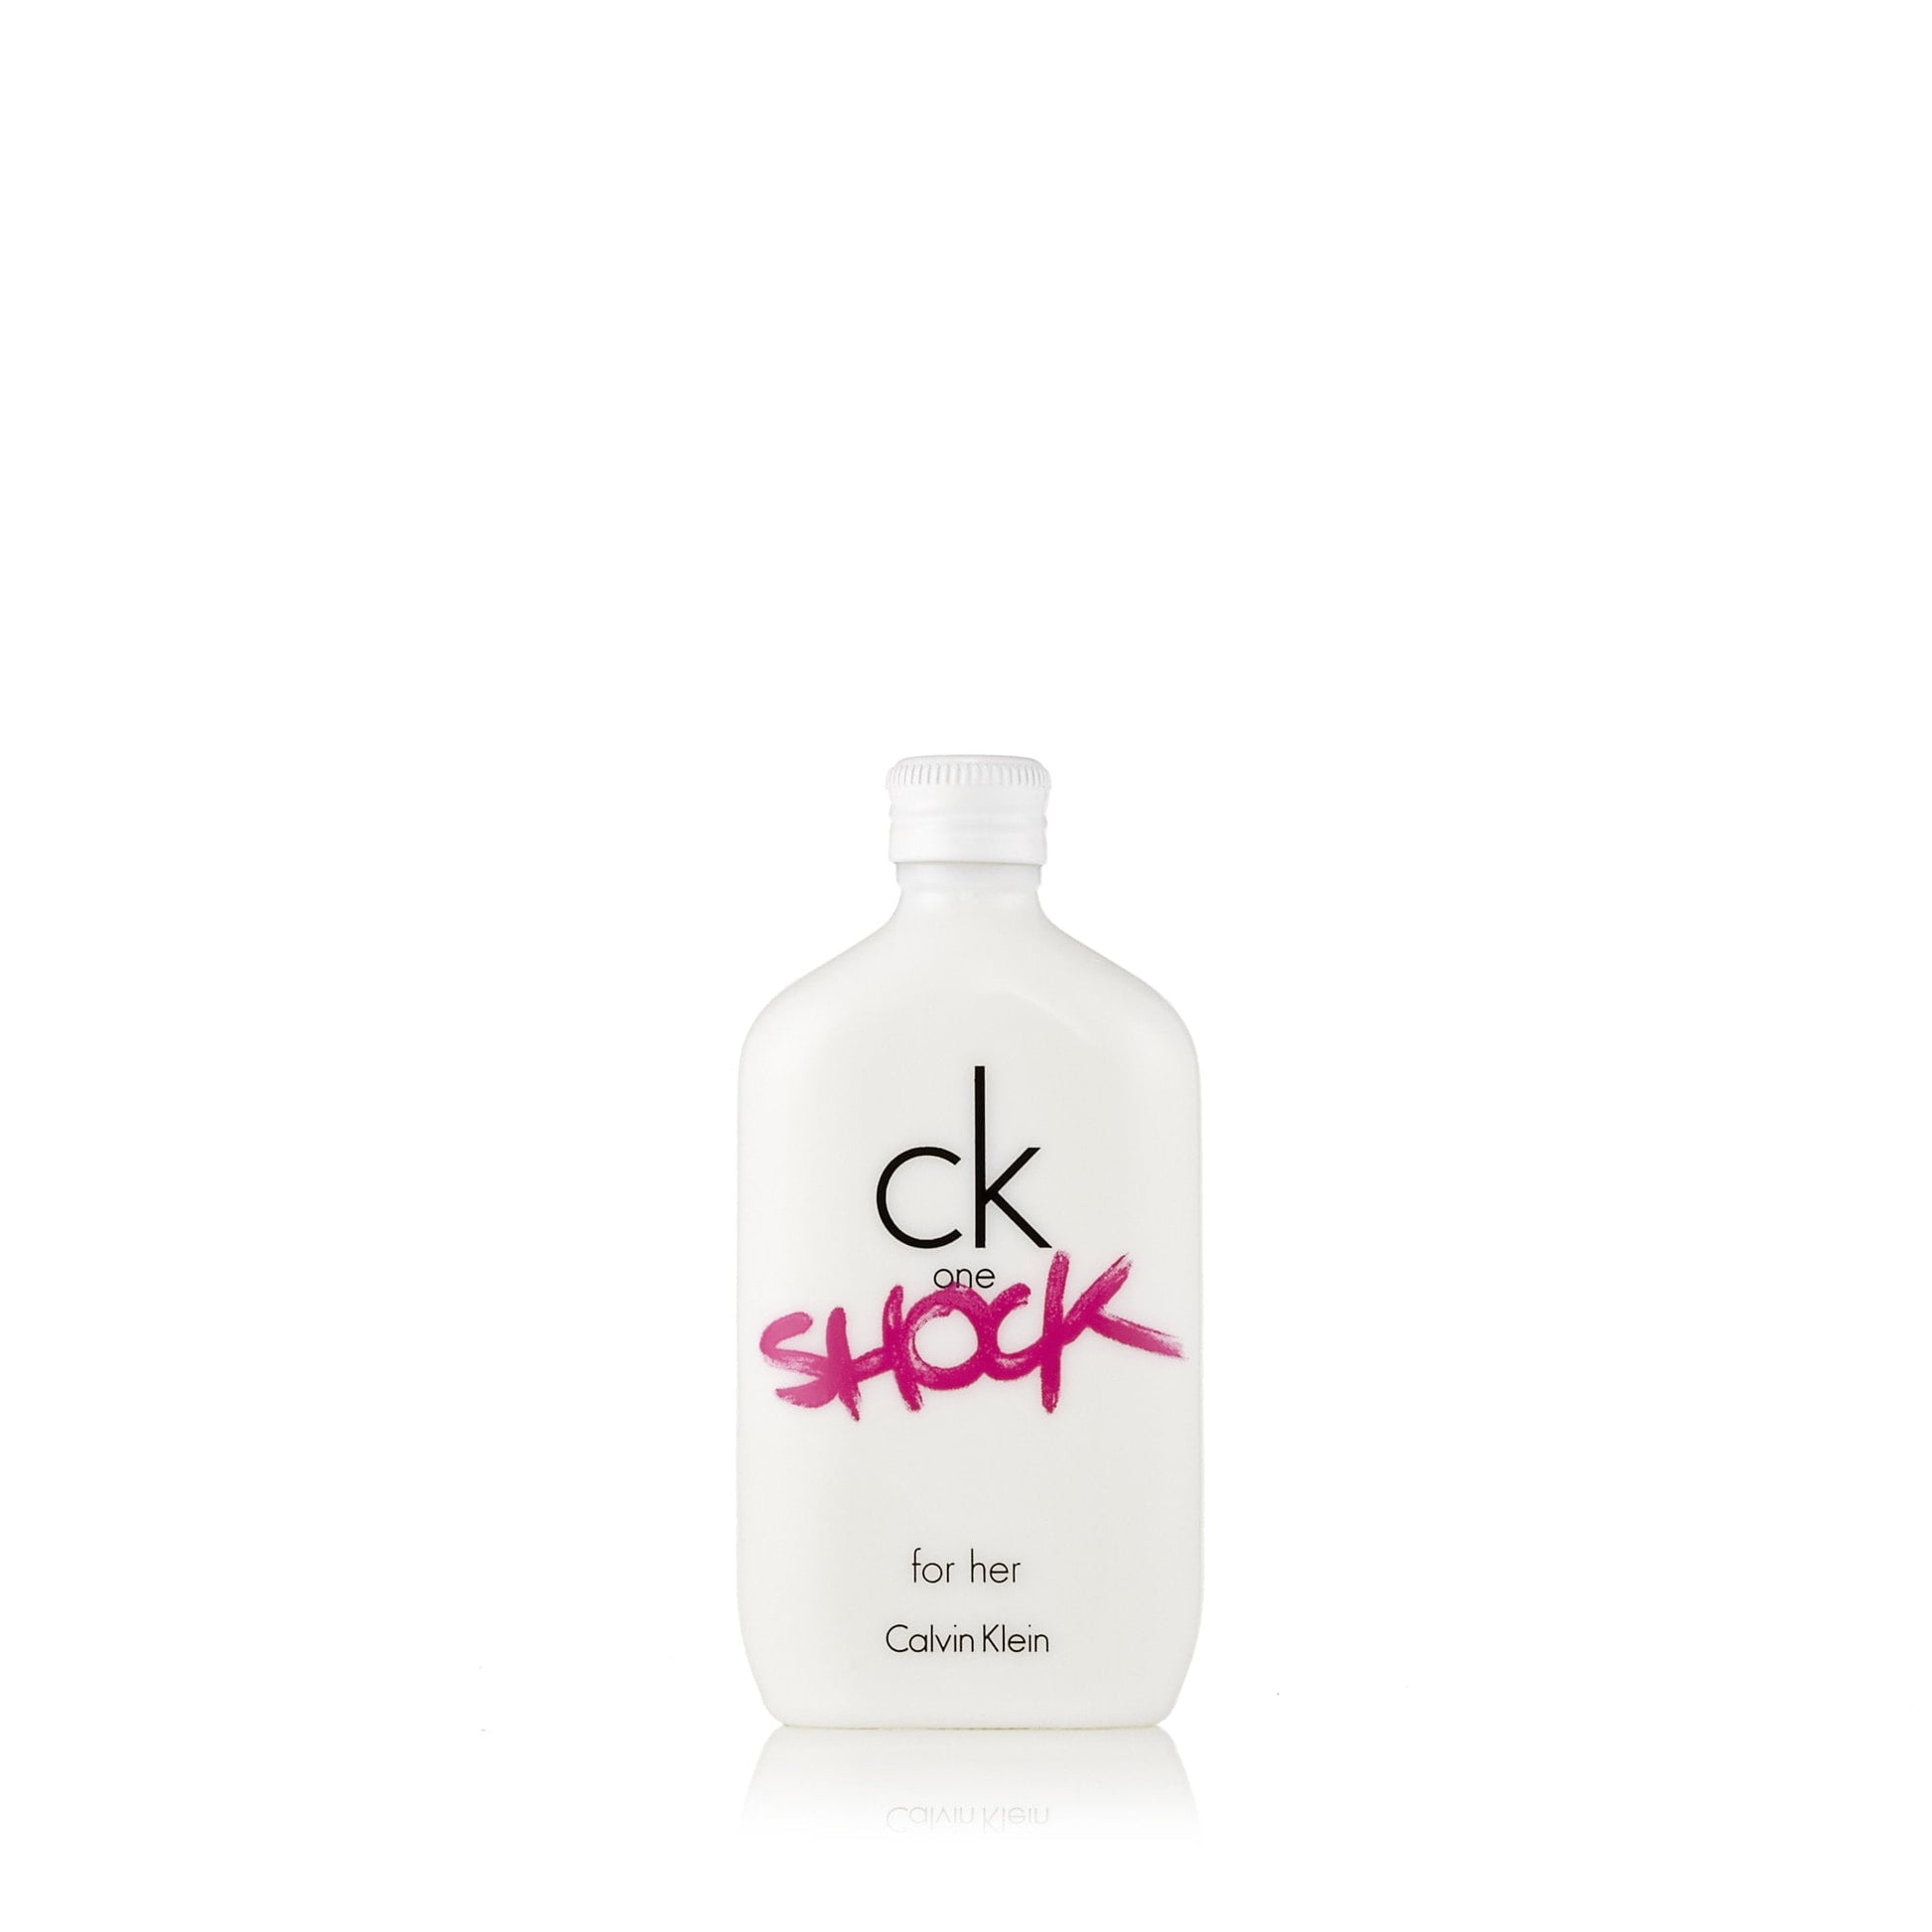 CK One Shock Eau de Toilette Spray for Women by Calvin Klein, Product image 2